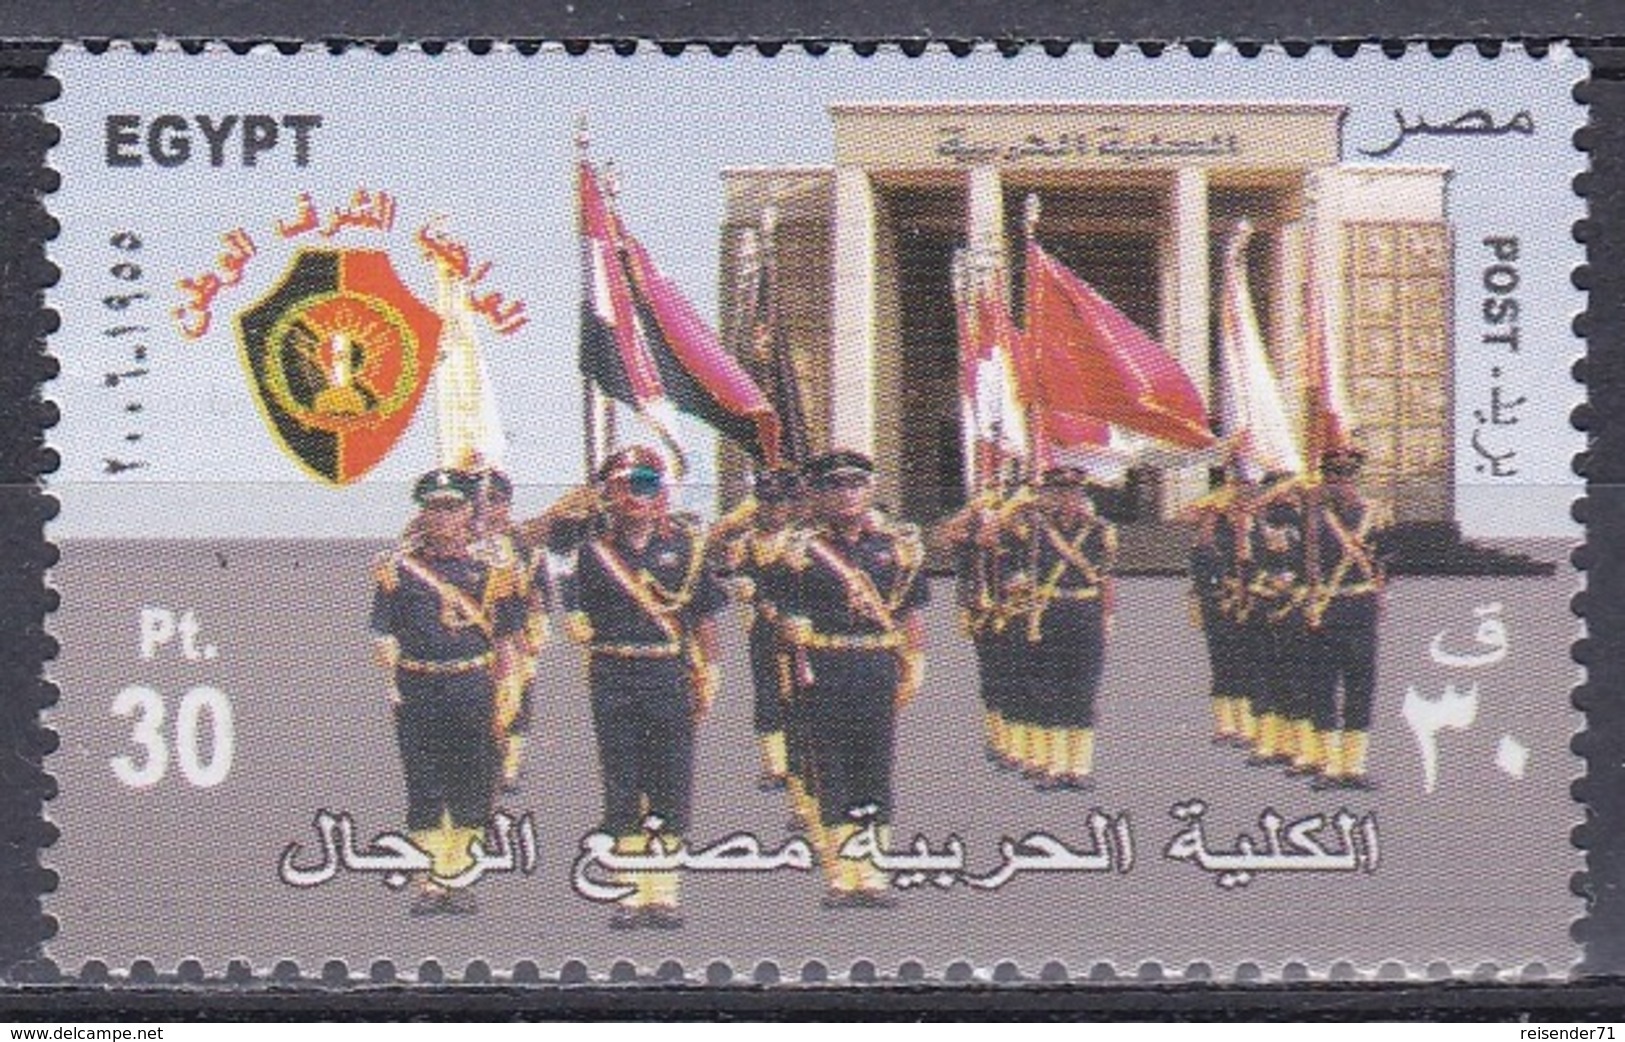 Ägypten Egypt 2006 Militär Military Armee Army Bildung Ausbildung Education Training Akademie, Mi. 2307 ** - Nuevos